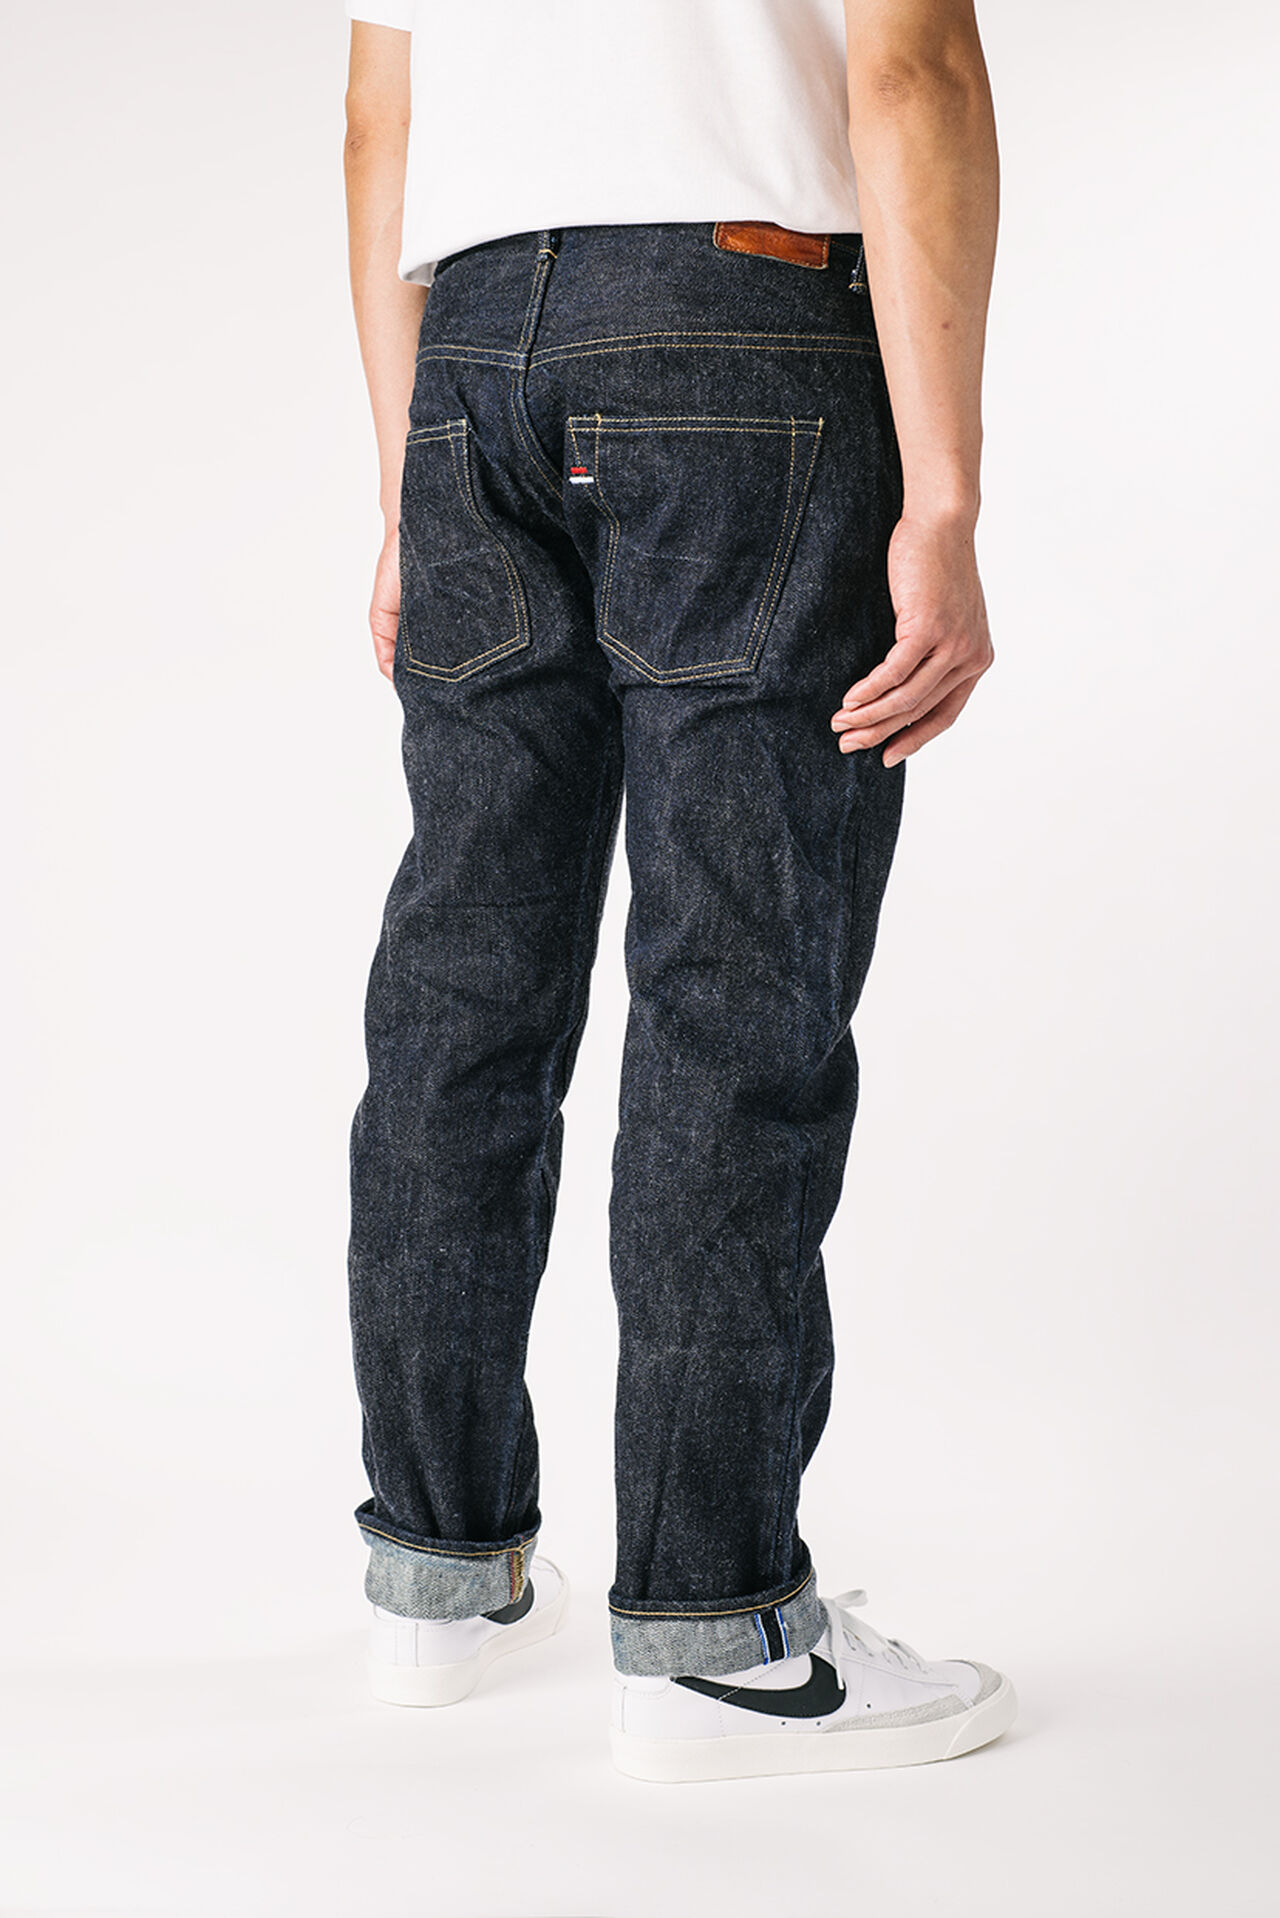 RCSST 16.5oz Redcast Slim Straight Jeans,, large image number 4